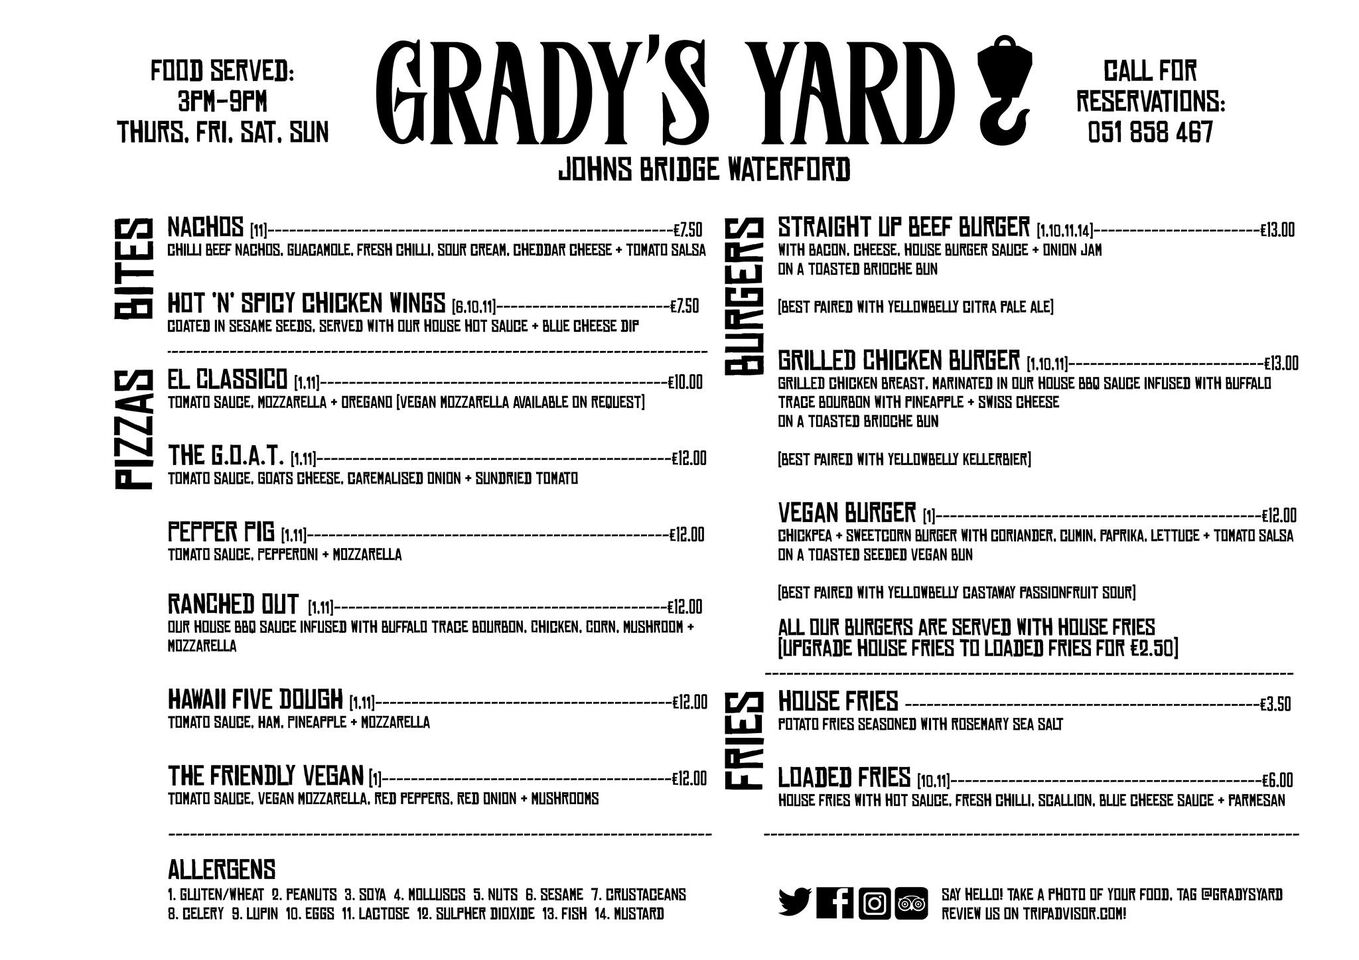 A photo of Grady’s Yard